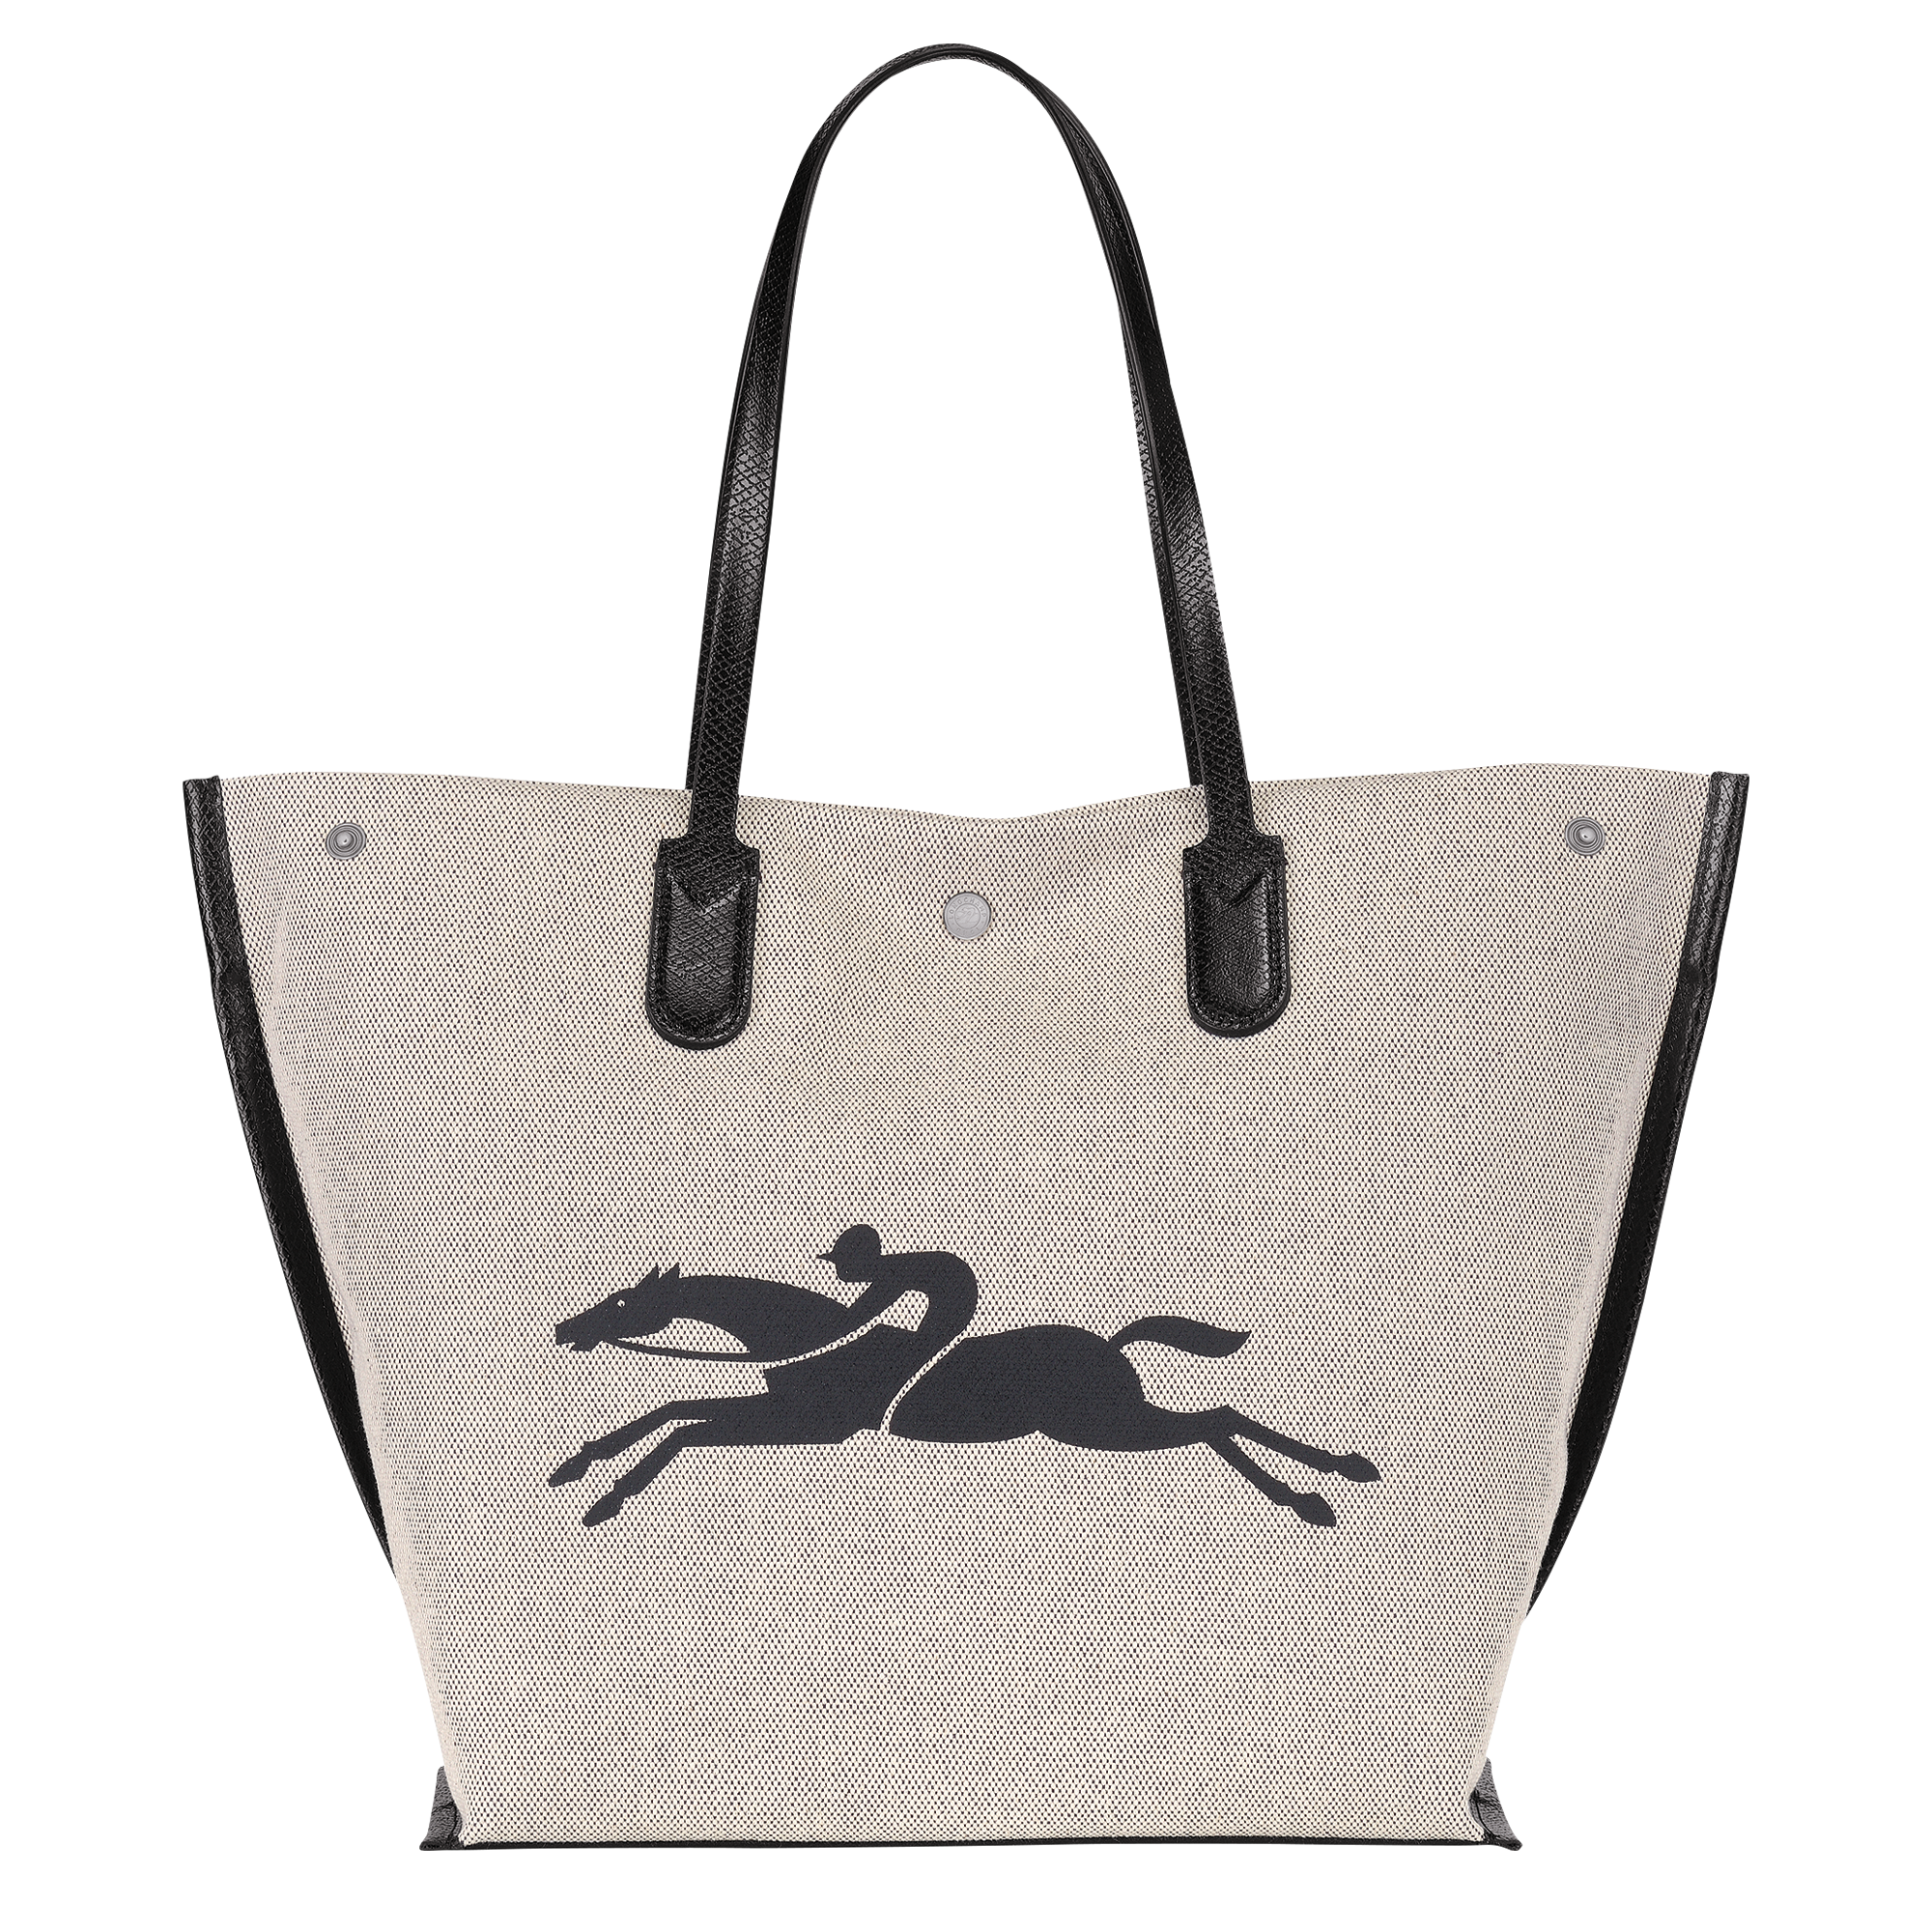 Longchamp Roseau Bucket Bag - Ecru